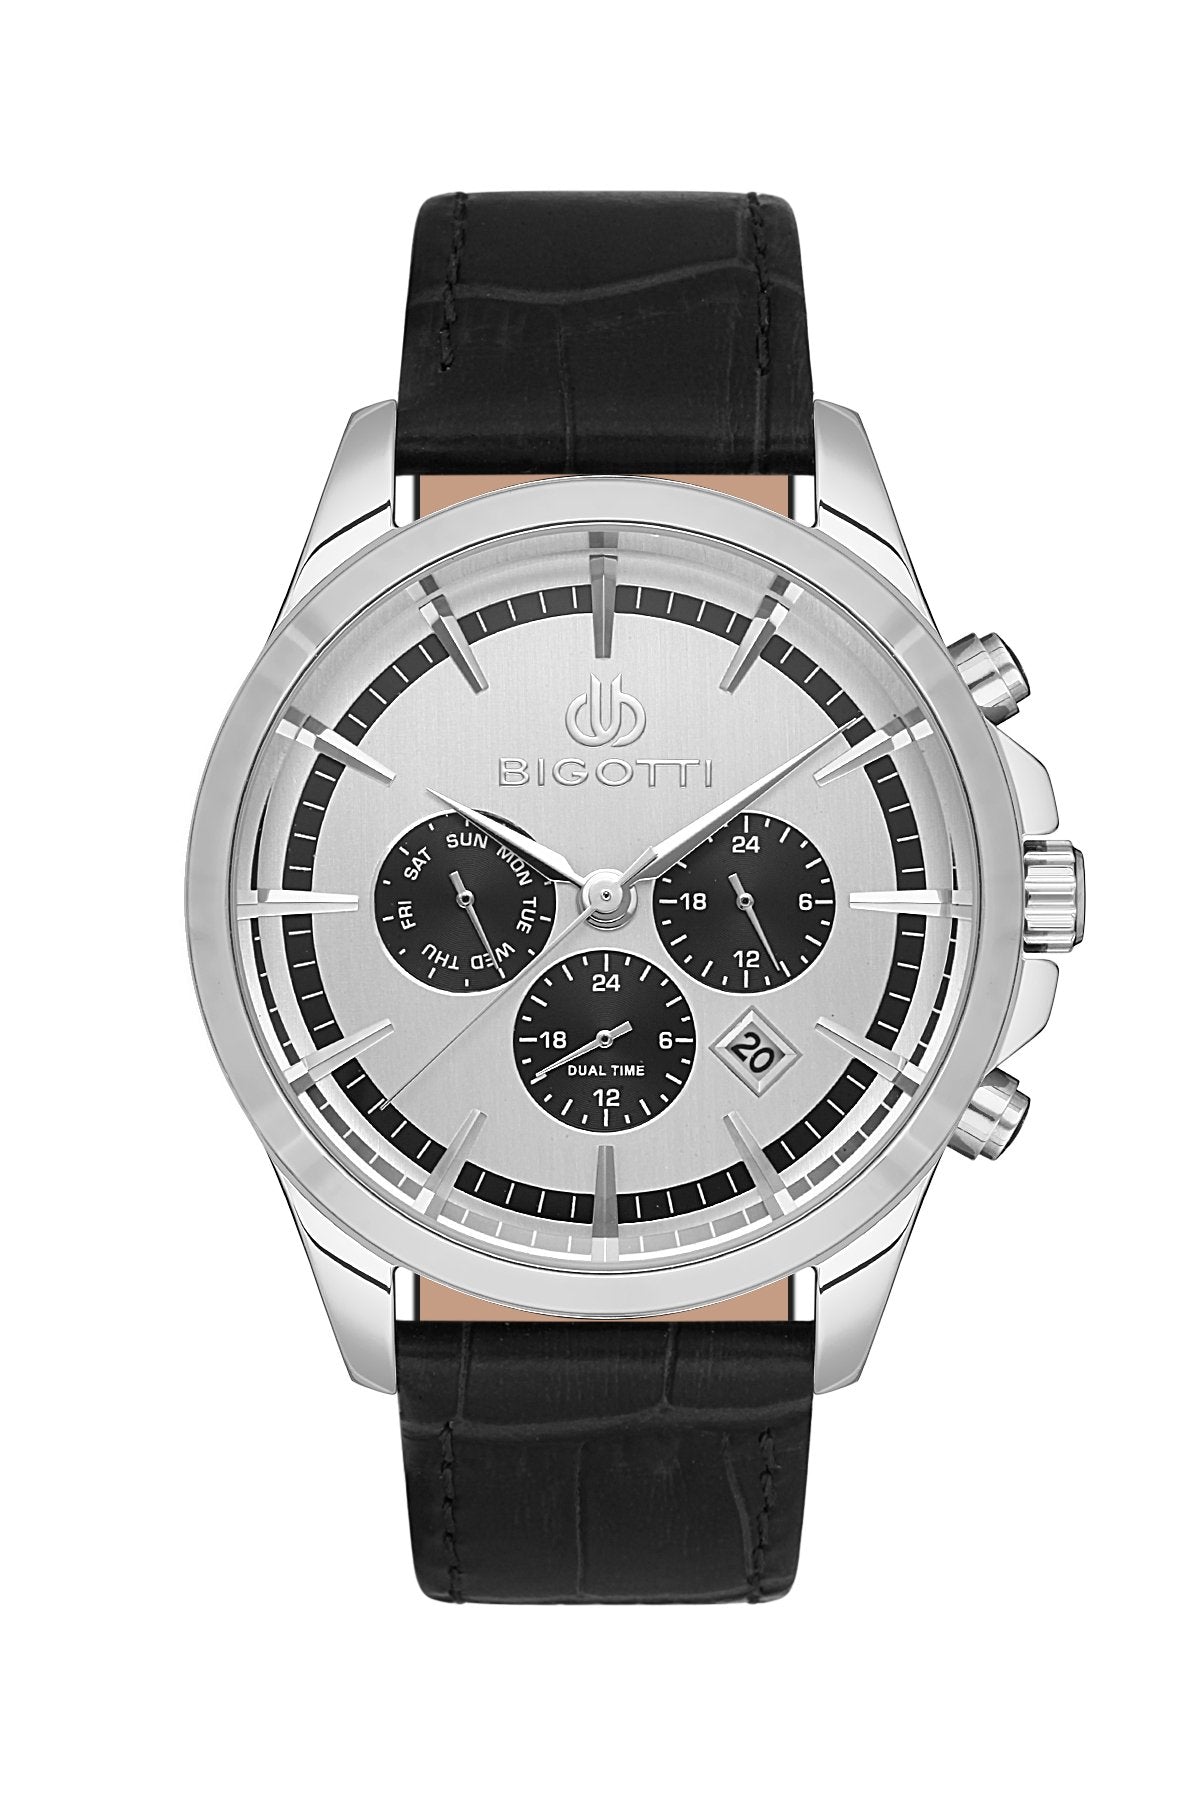 Takreem Luxury Men's Watch by Bigotti Milano - BG.1.10491-1 - #shoTakreem Luxury Men's Watch by Bigotti Milano - BG.1.10491-1p_name#Takreem Luxury Men's Watch by Bigotti Milano - BG.1.10491-1WatchBigotti MilanoTakreem.joBG.1.10491-18.68231E+12MenBlackLeatherTakreem Luxury Men's Watch by Bigotti Milano - BG.1.10491-1